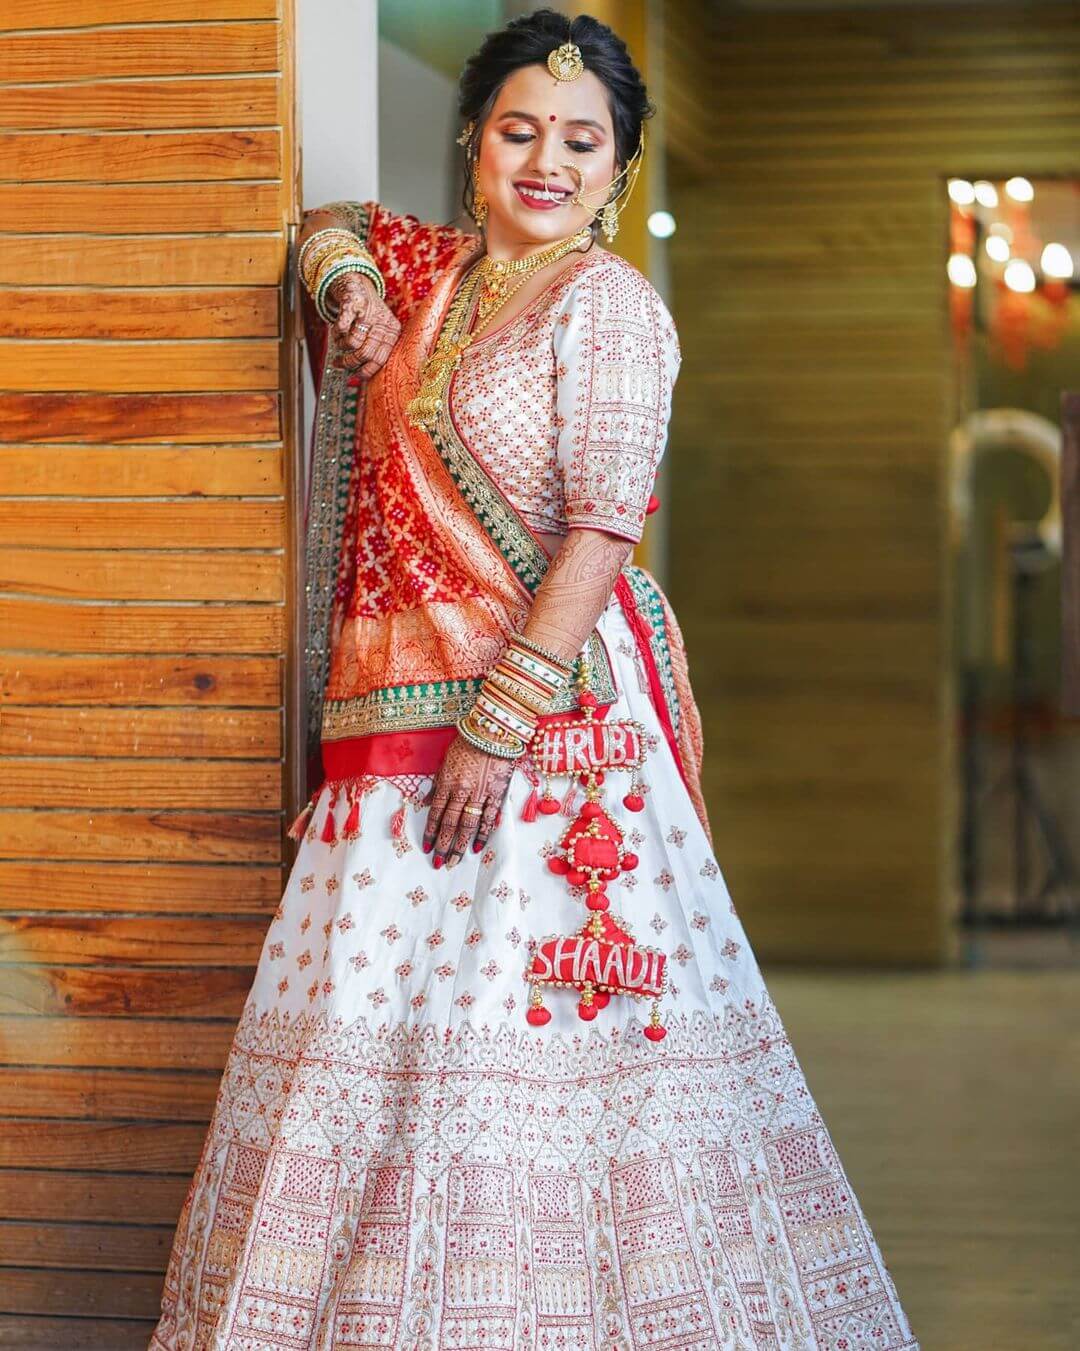 gujarati bridal portrait - ShaadiWish